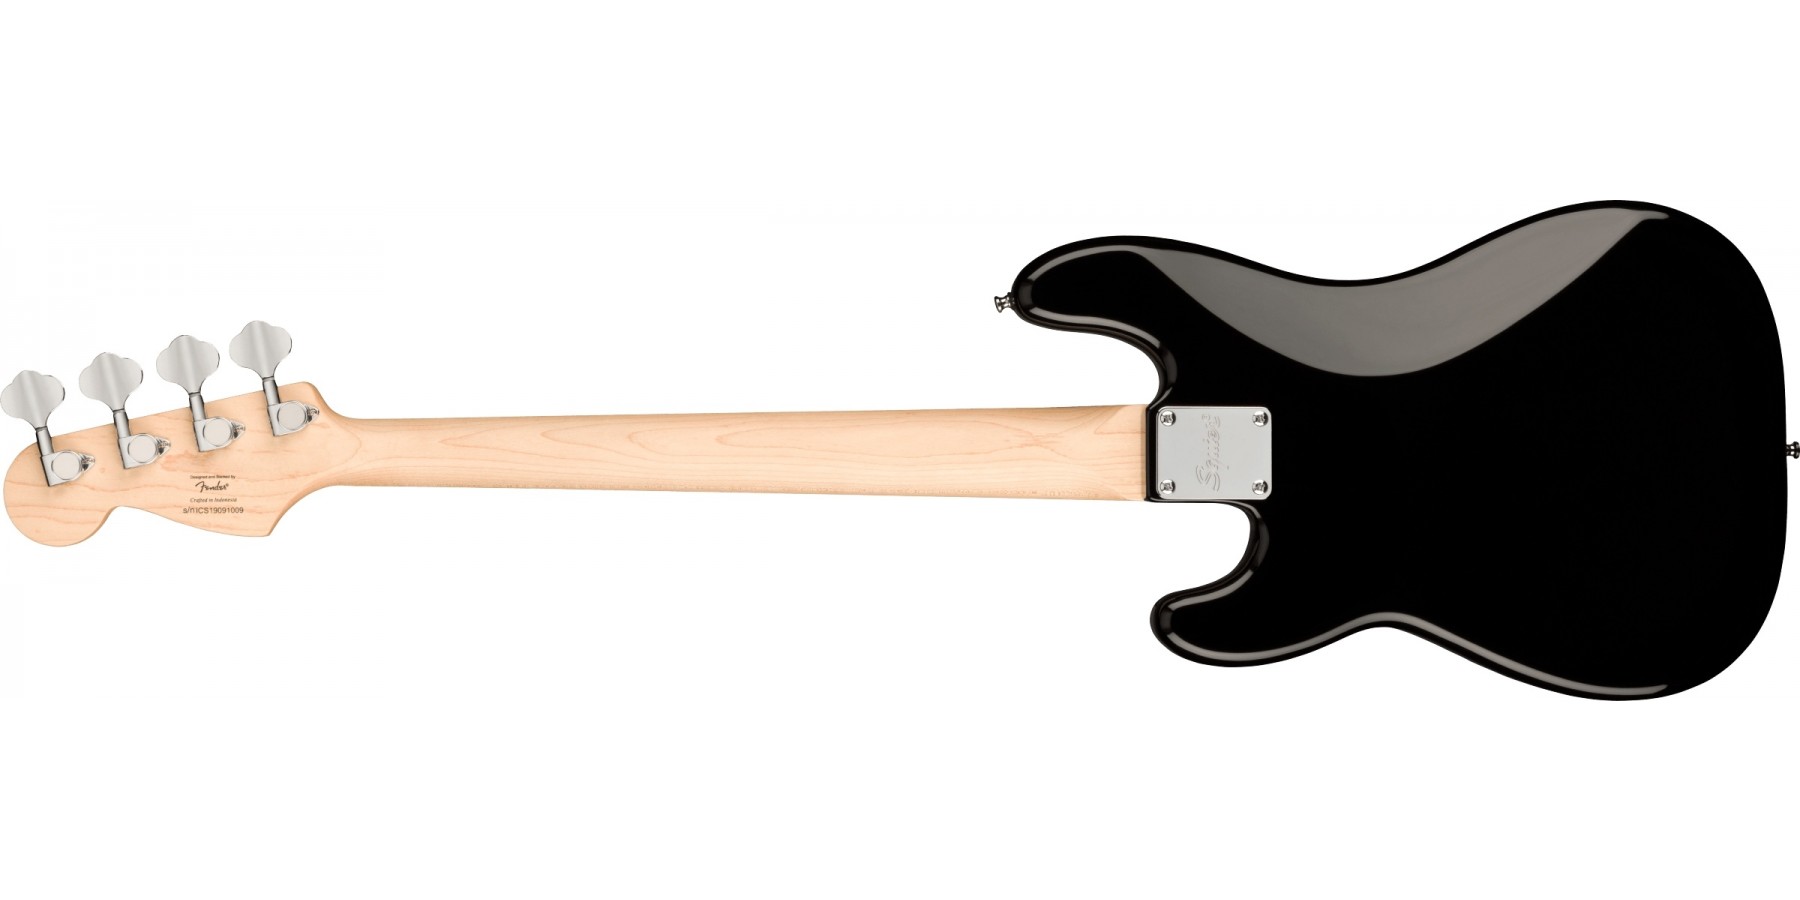 Squier Mini Precision Bass Black - Guitar.co.uk